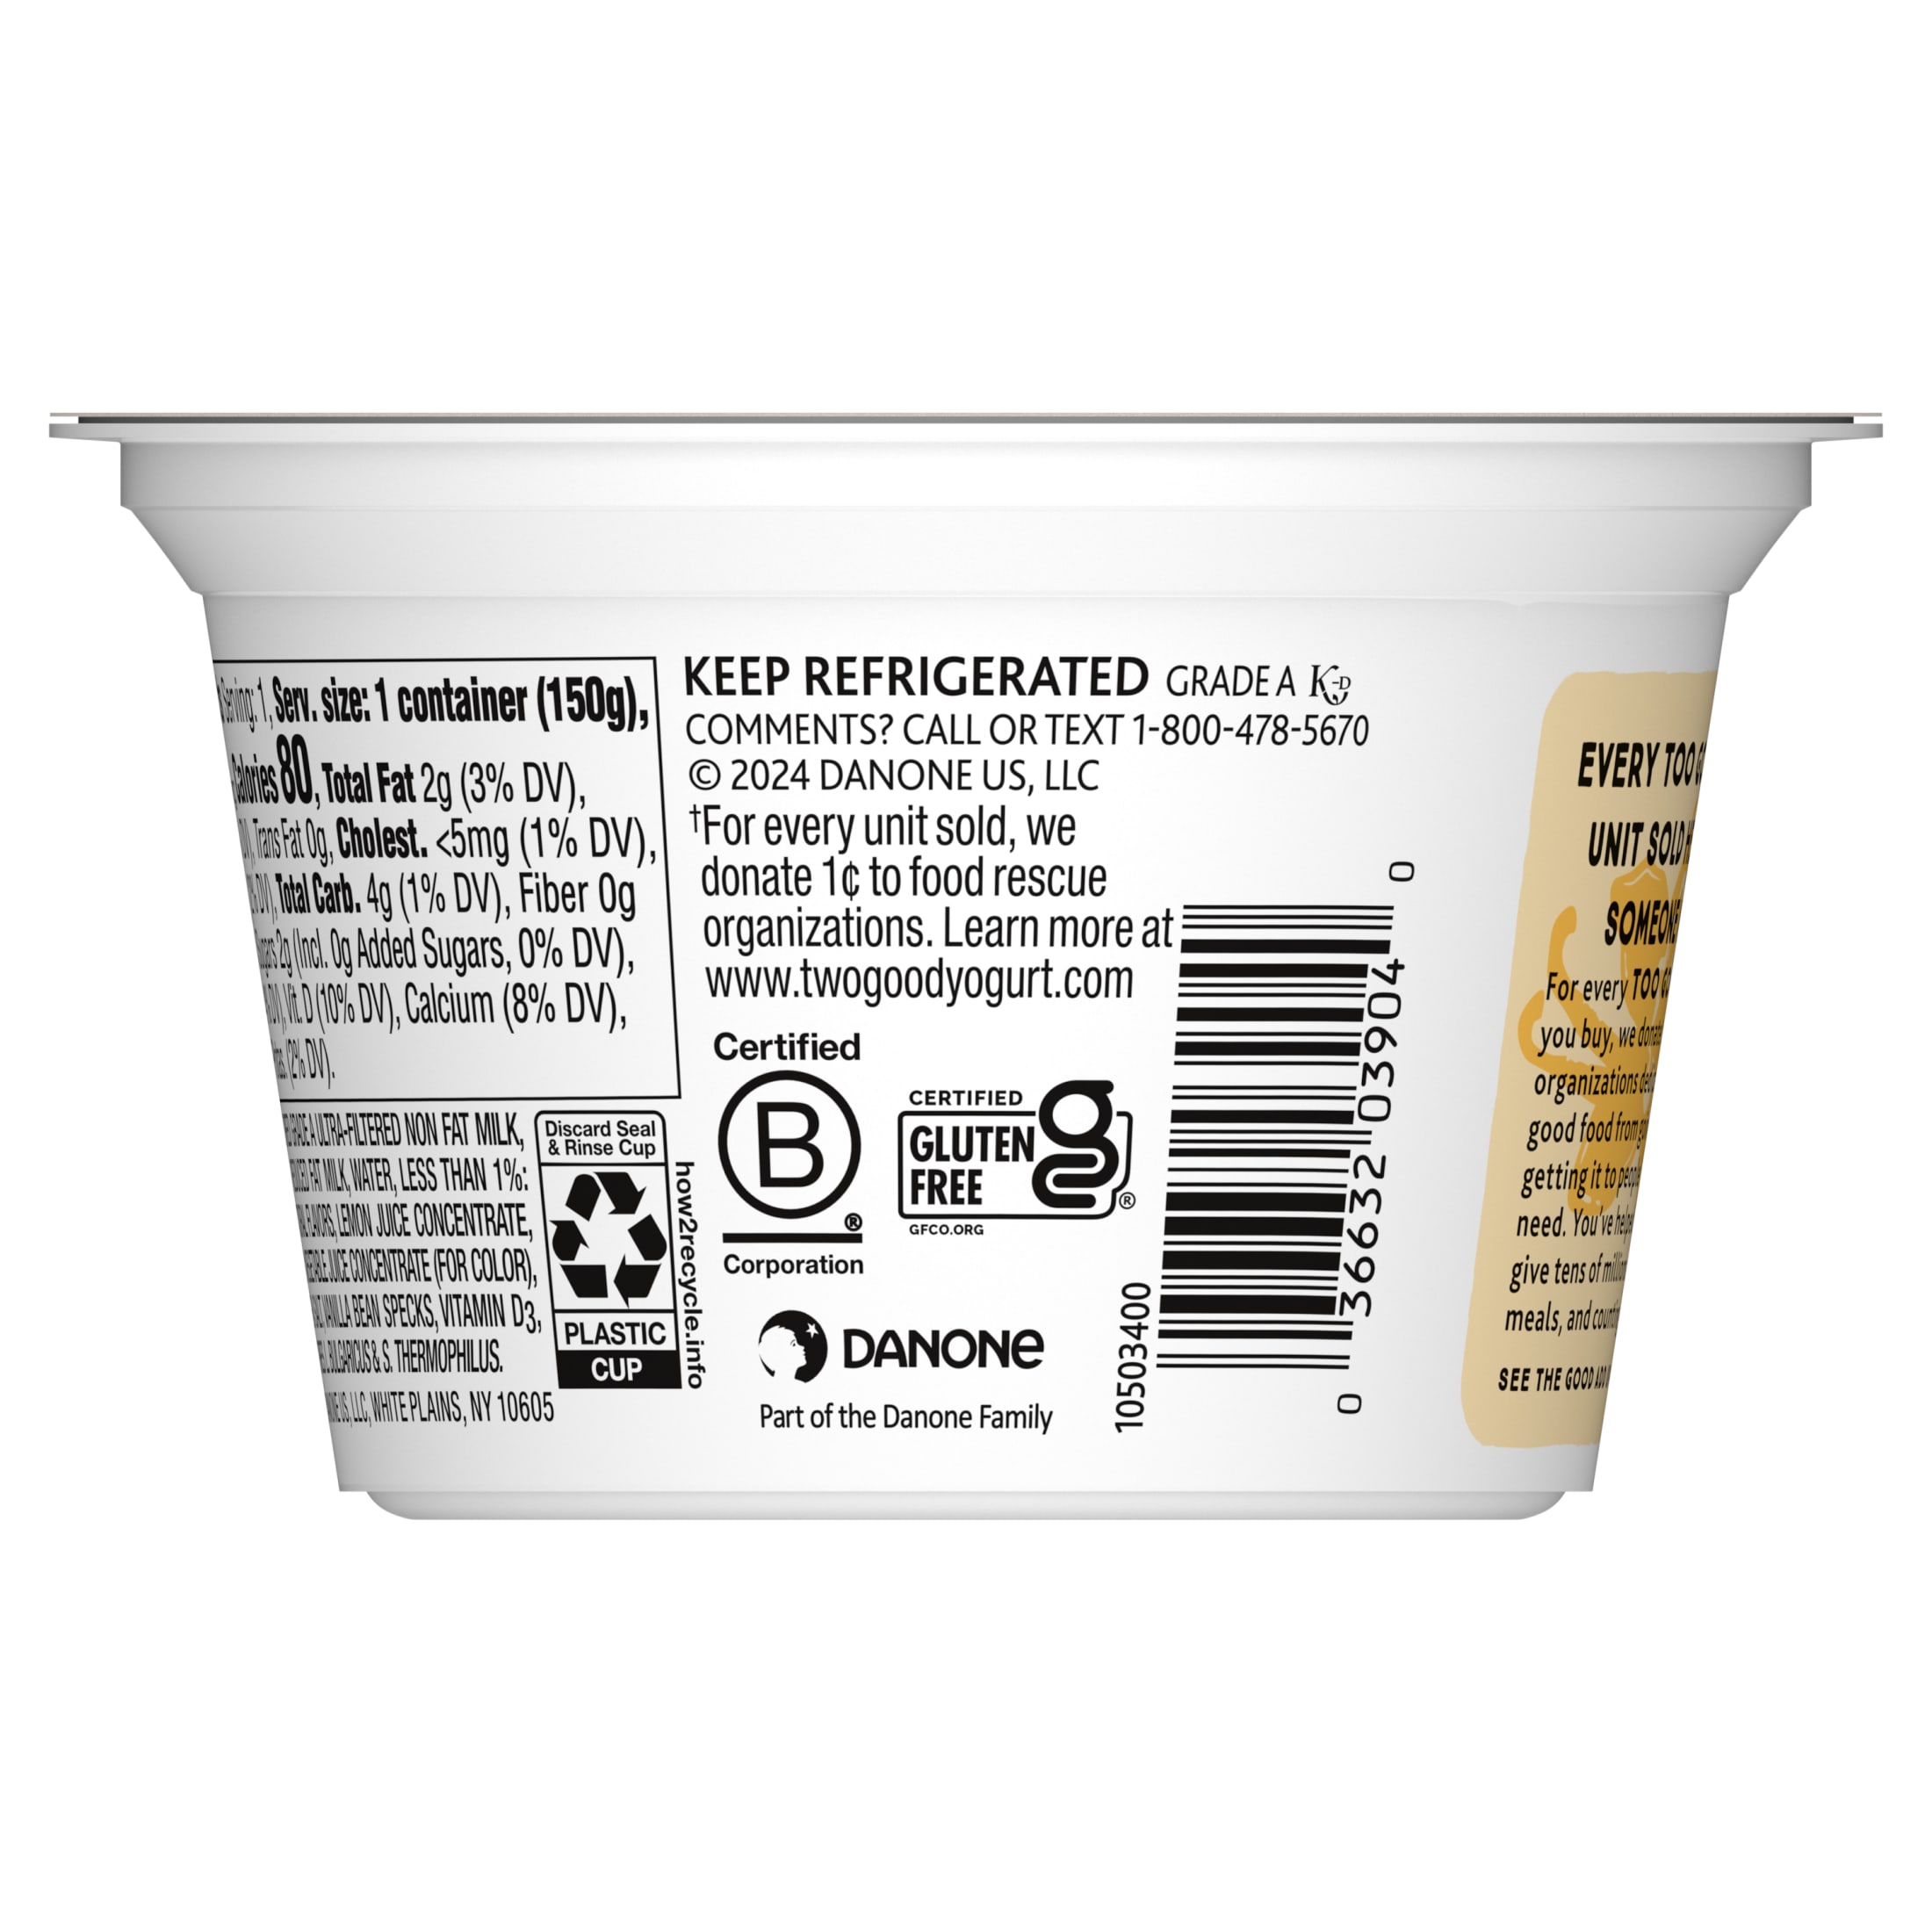 Too Good & Co. Lower Sugar Vanilla Flavored Low Fat Greek Yogurt Cultured Product, 5.3 oz - image 3 of 11